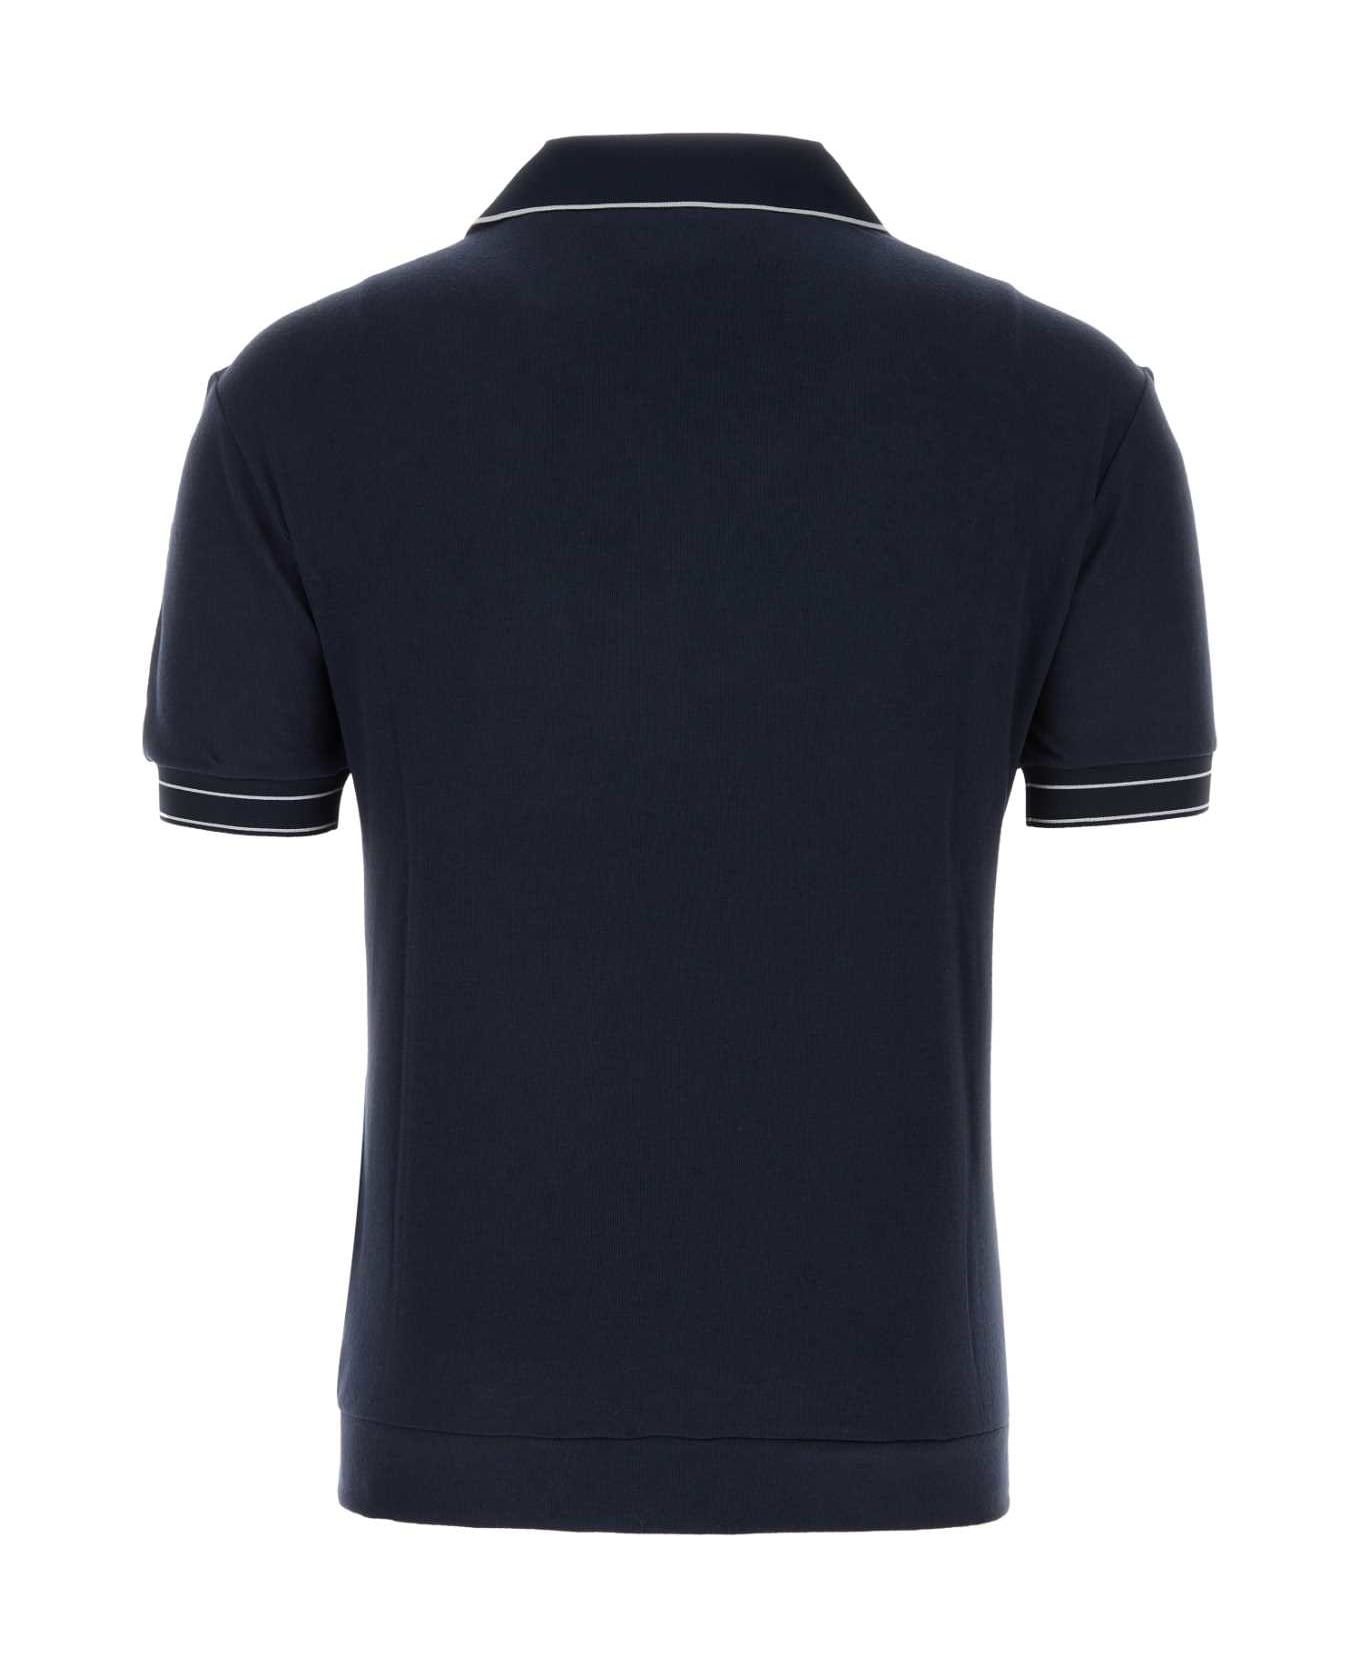 Giorgio Armani Midnight Bue Viscose Blend Polo Shirt - NAVY ポロシャツ